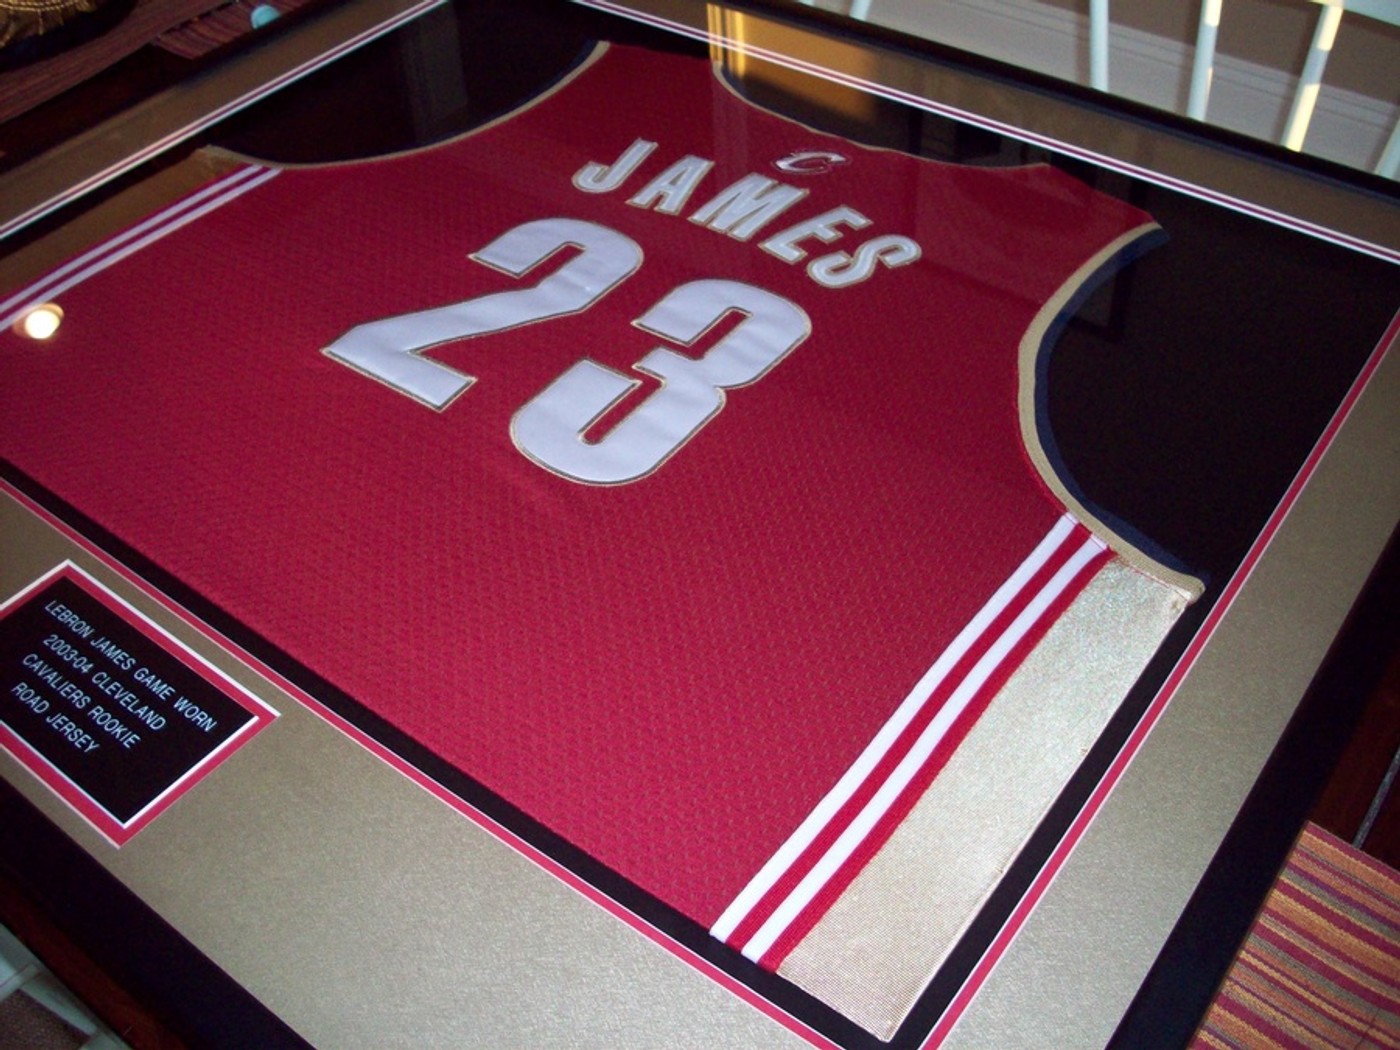 2003-04 LeBron James Game-Worn Cavaliers Rookie Jersey